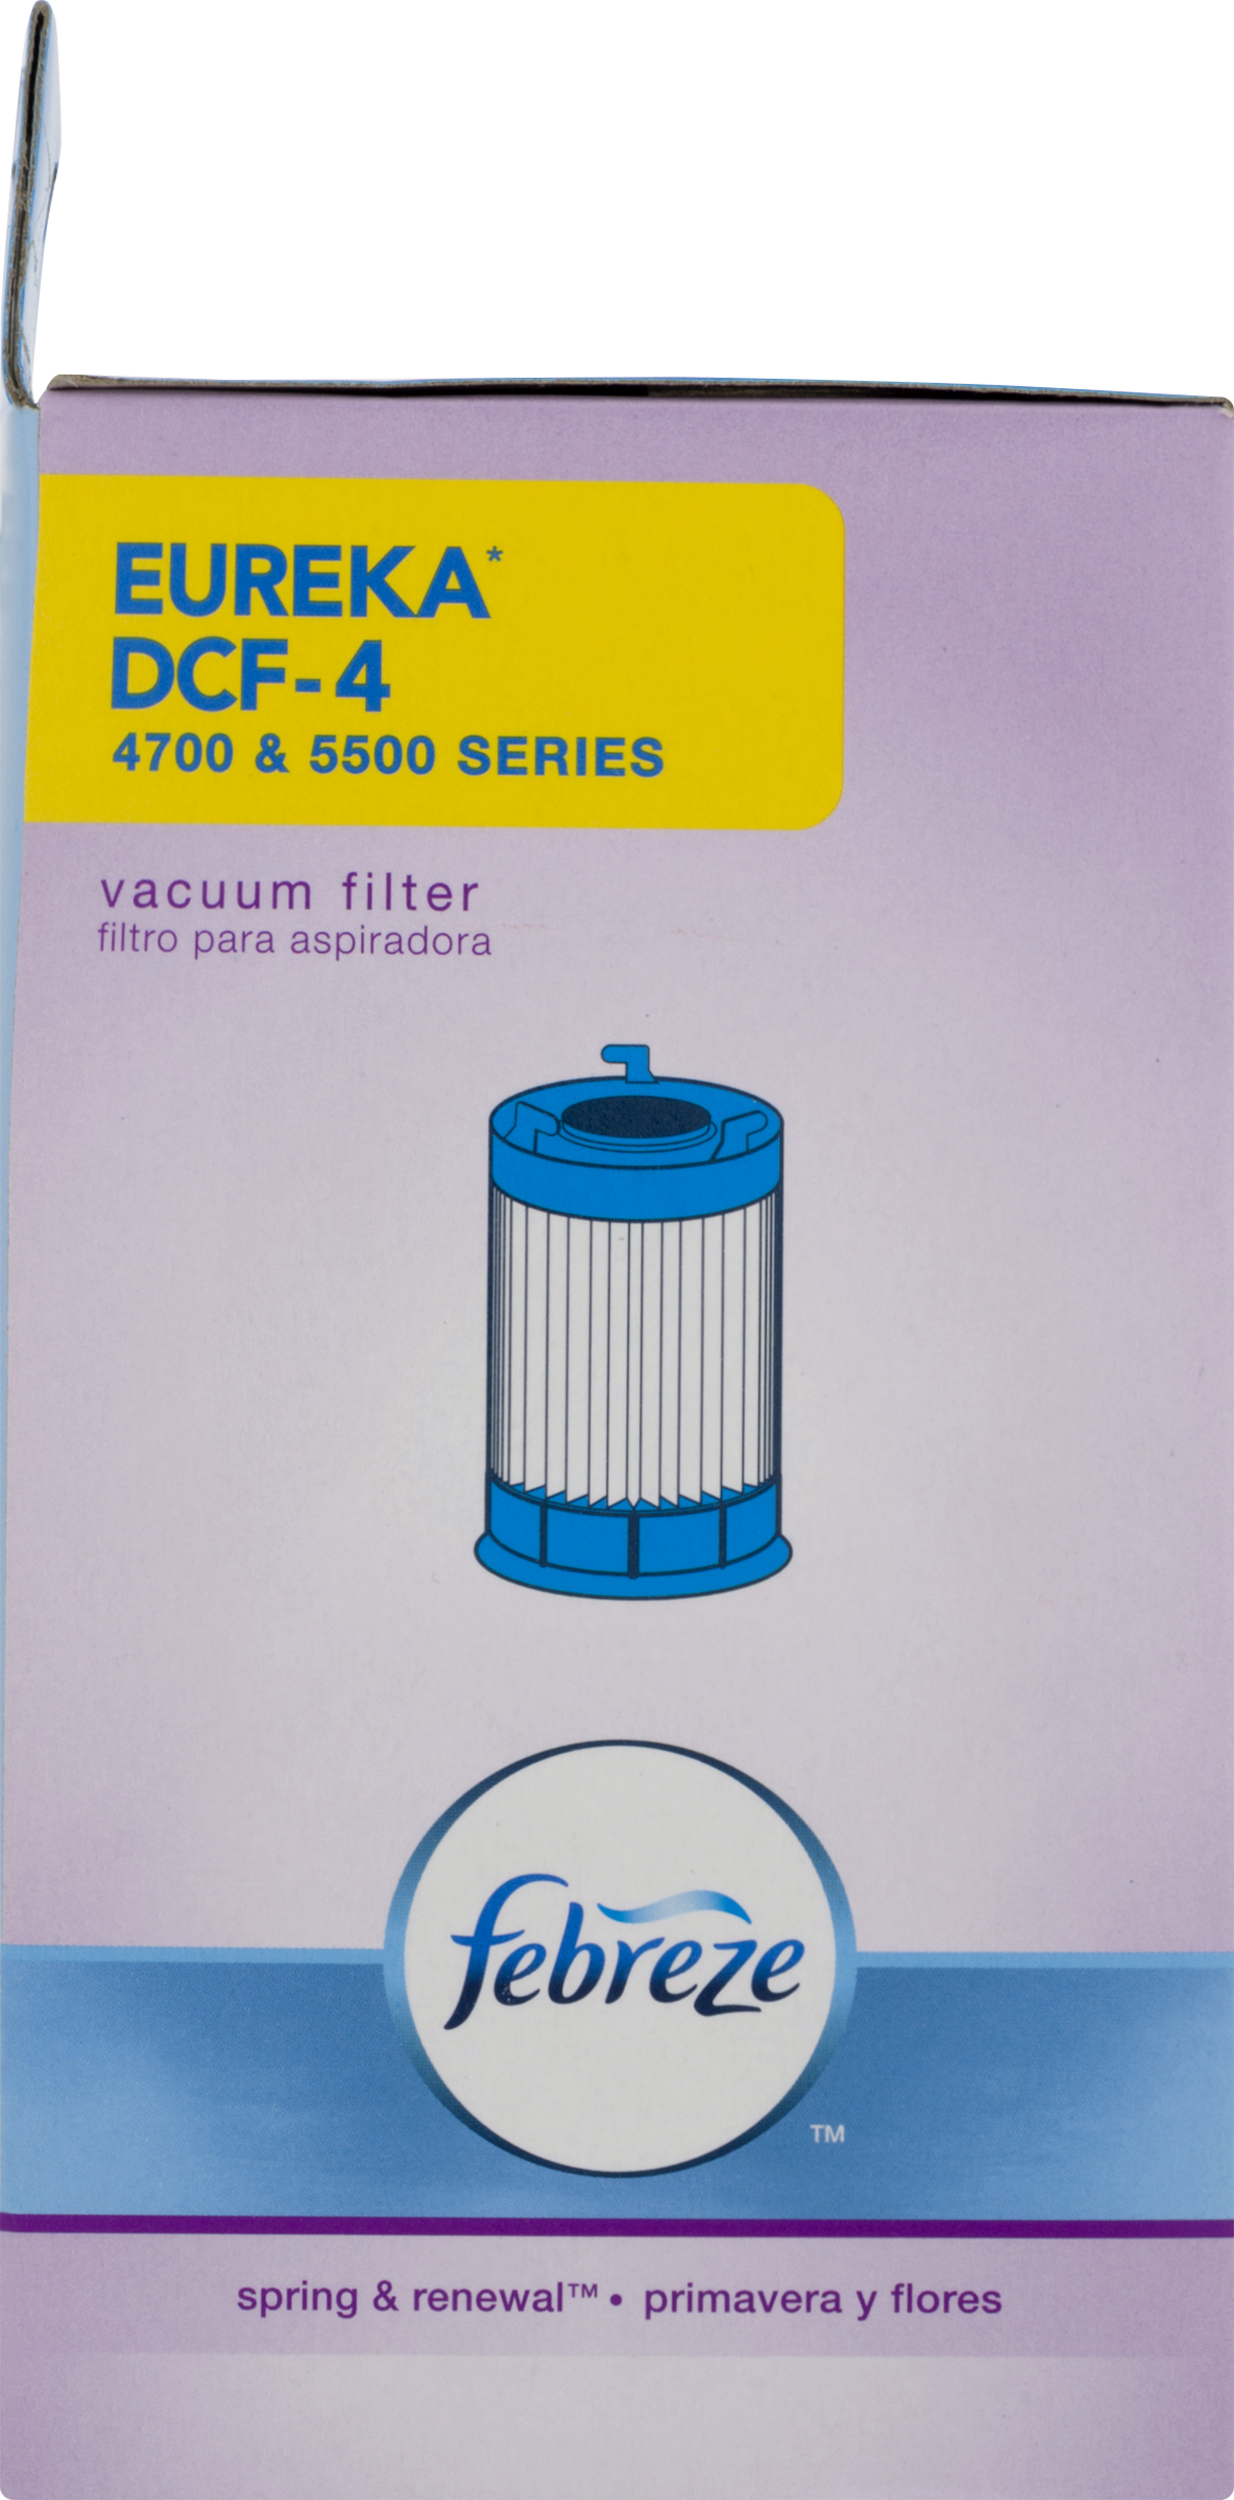 Febreze Vacuum Filter For Eureka Dcf-4 4700 & 5500 - Cylinder Clipart (1234x2500), Png Download